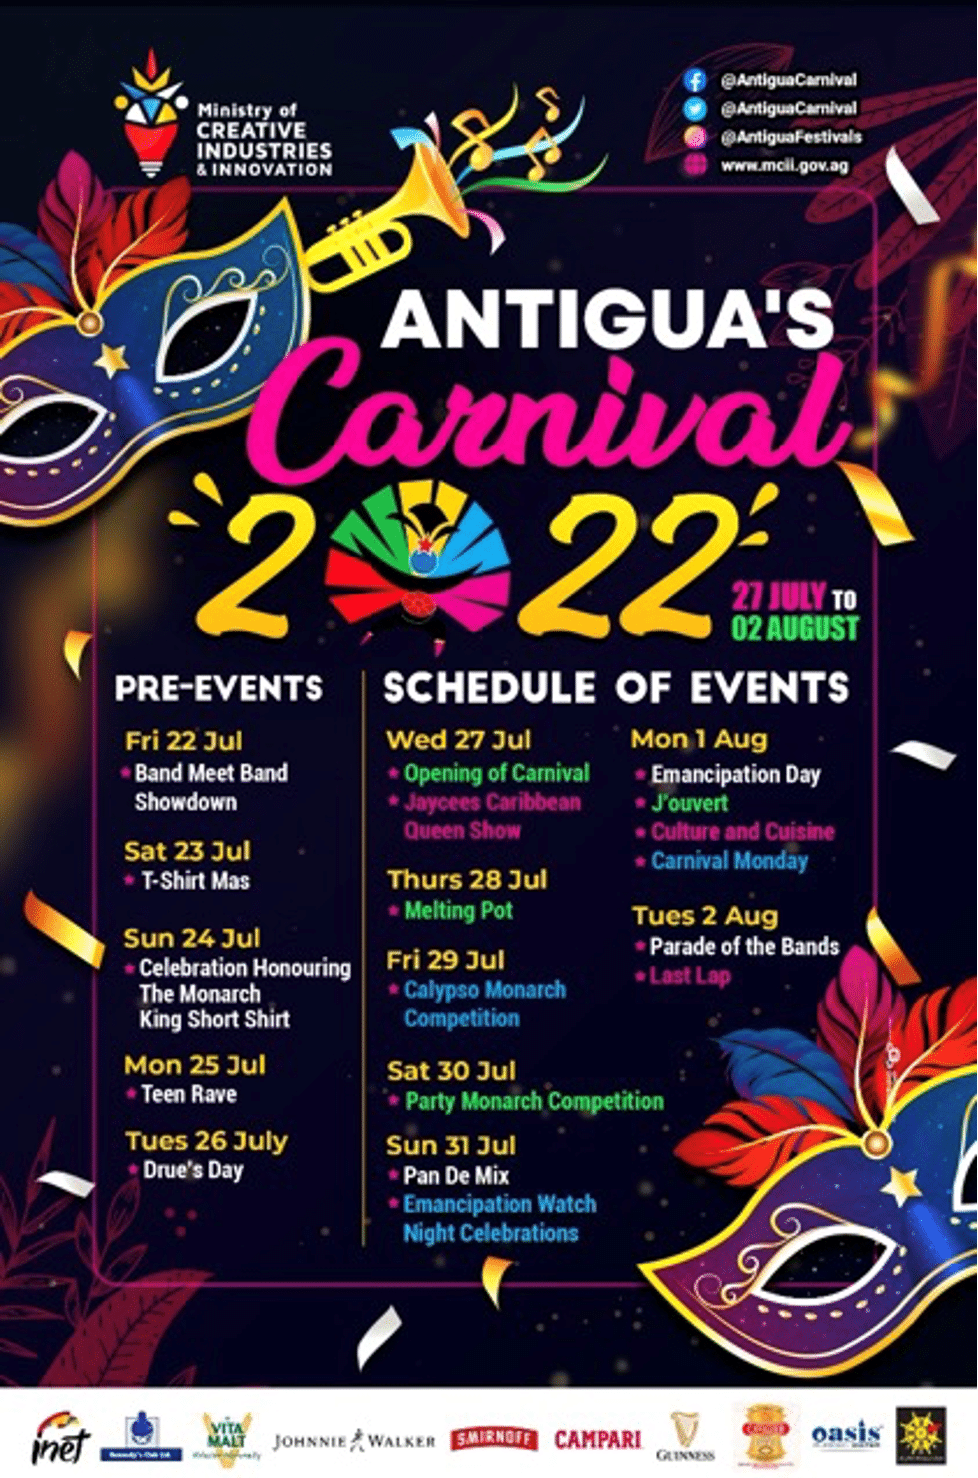 Antigua & Barbuda : Carnival is Back!